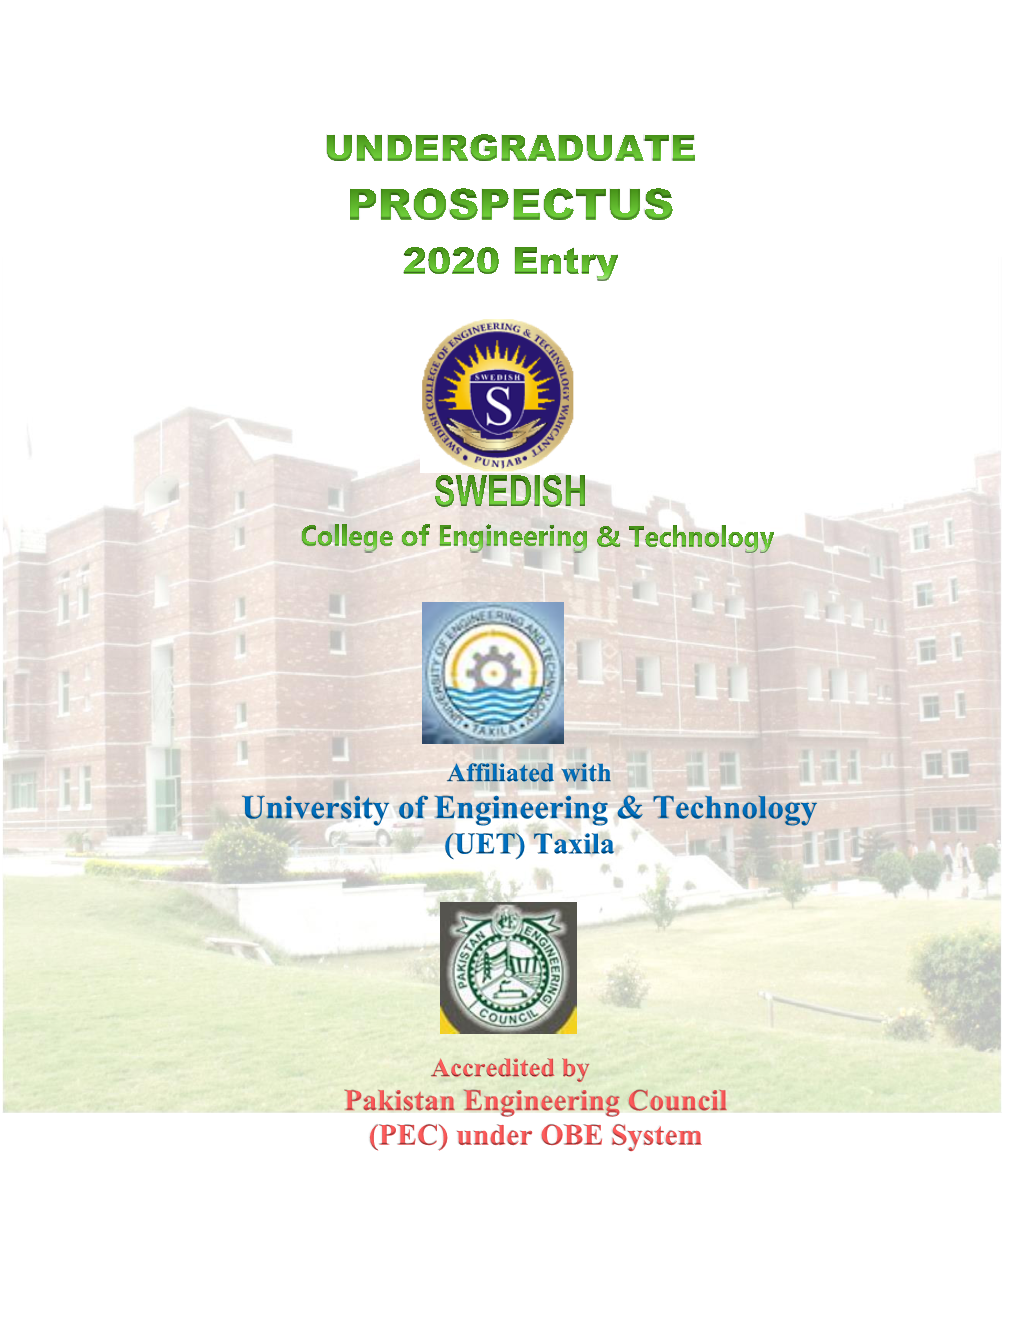 University of Engineering & Technology